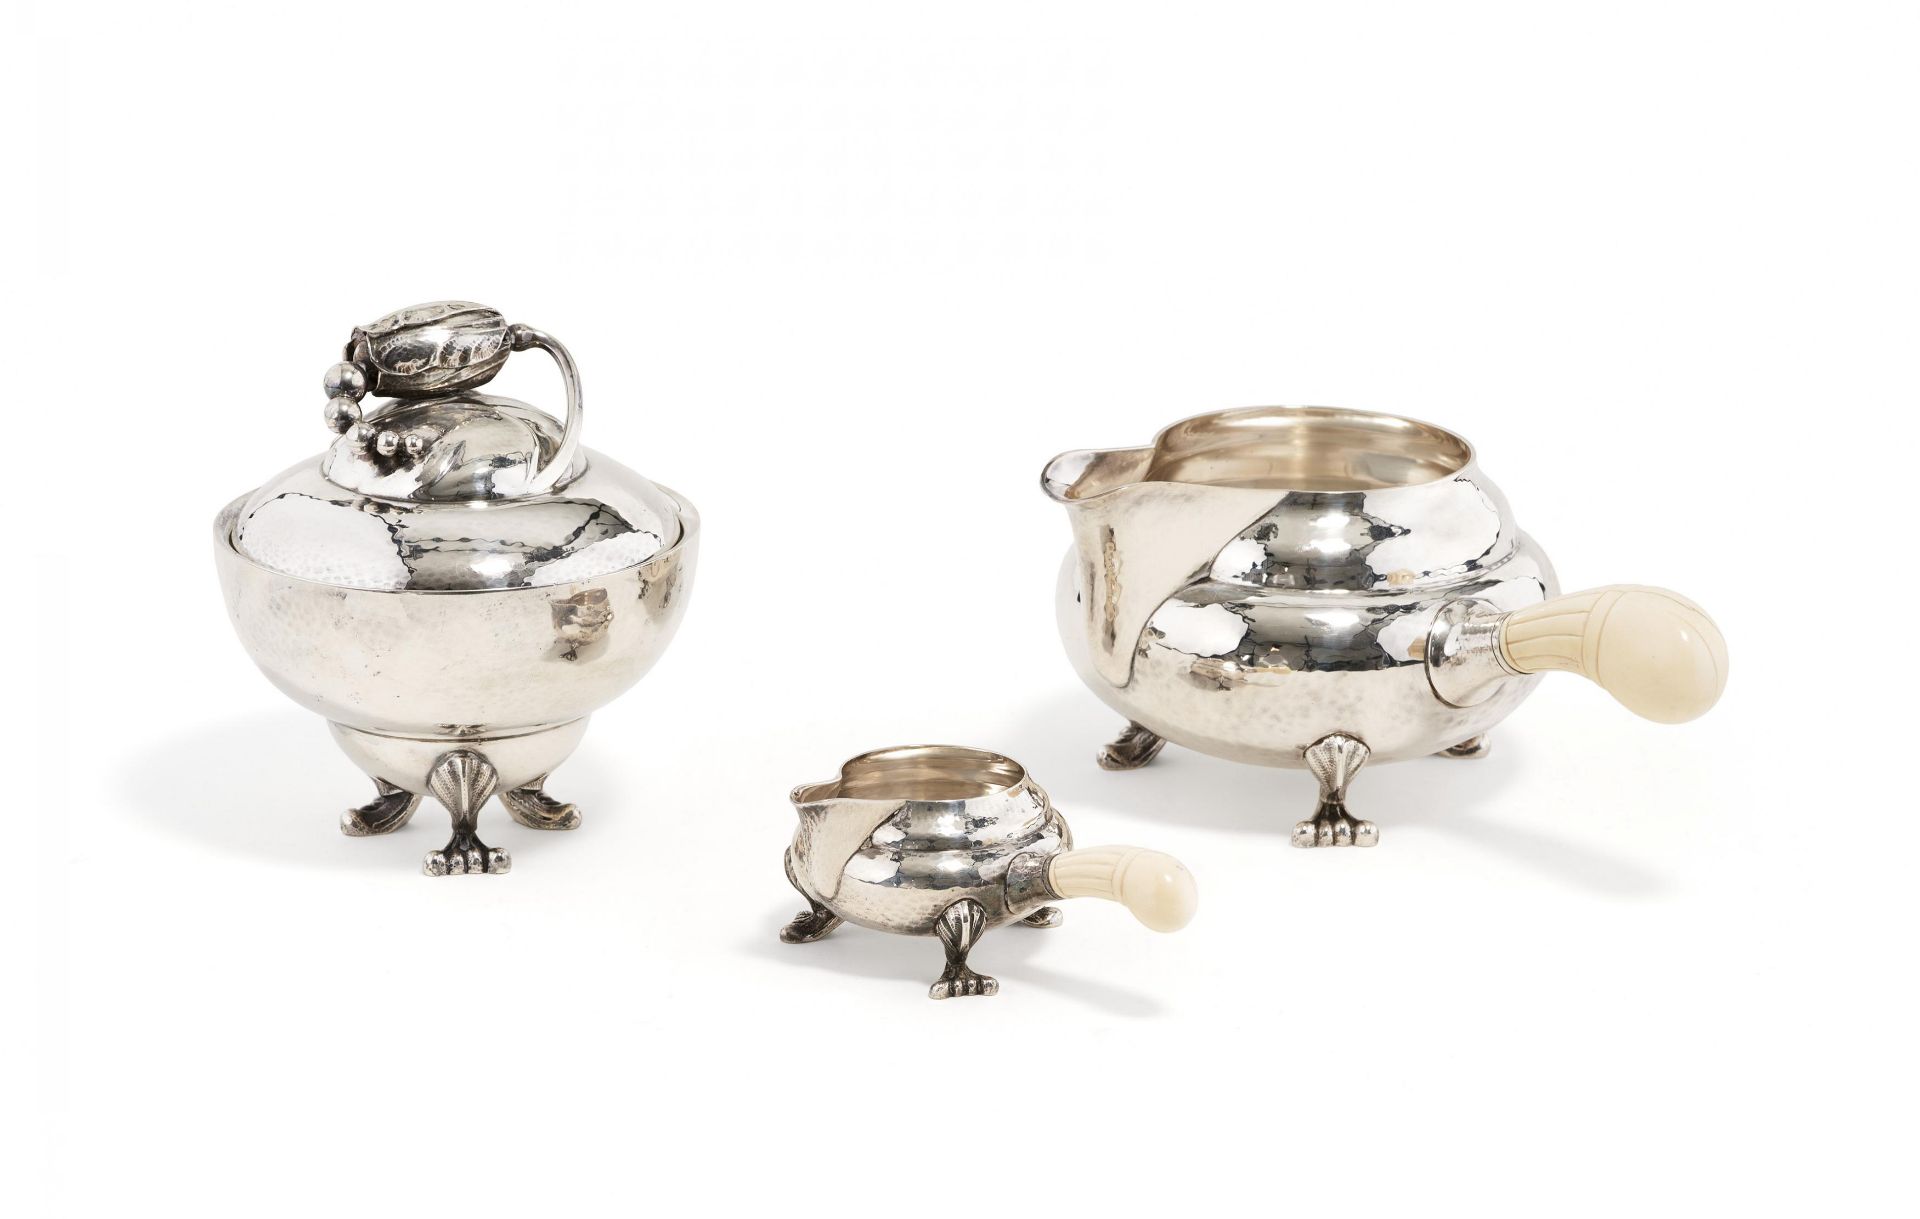 Silver sugar bowl, creamer & milk jug "Blossom" with ivory handles - Image 2 of 14